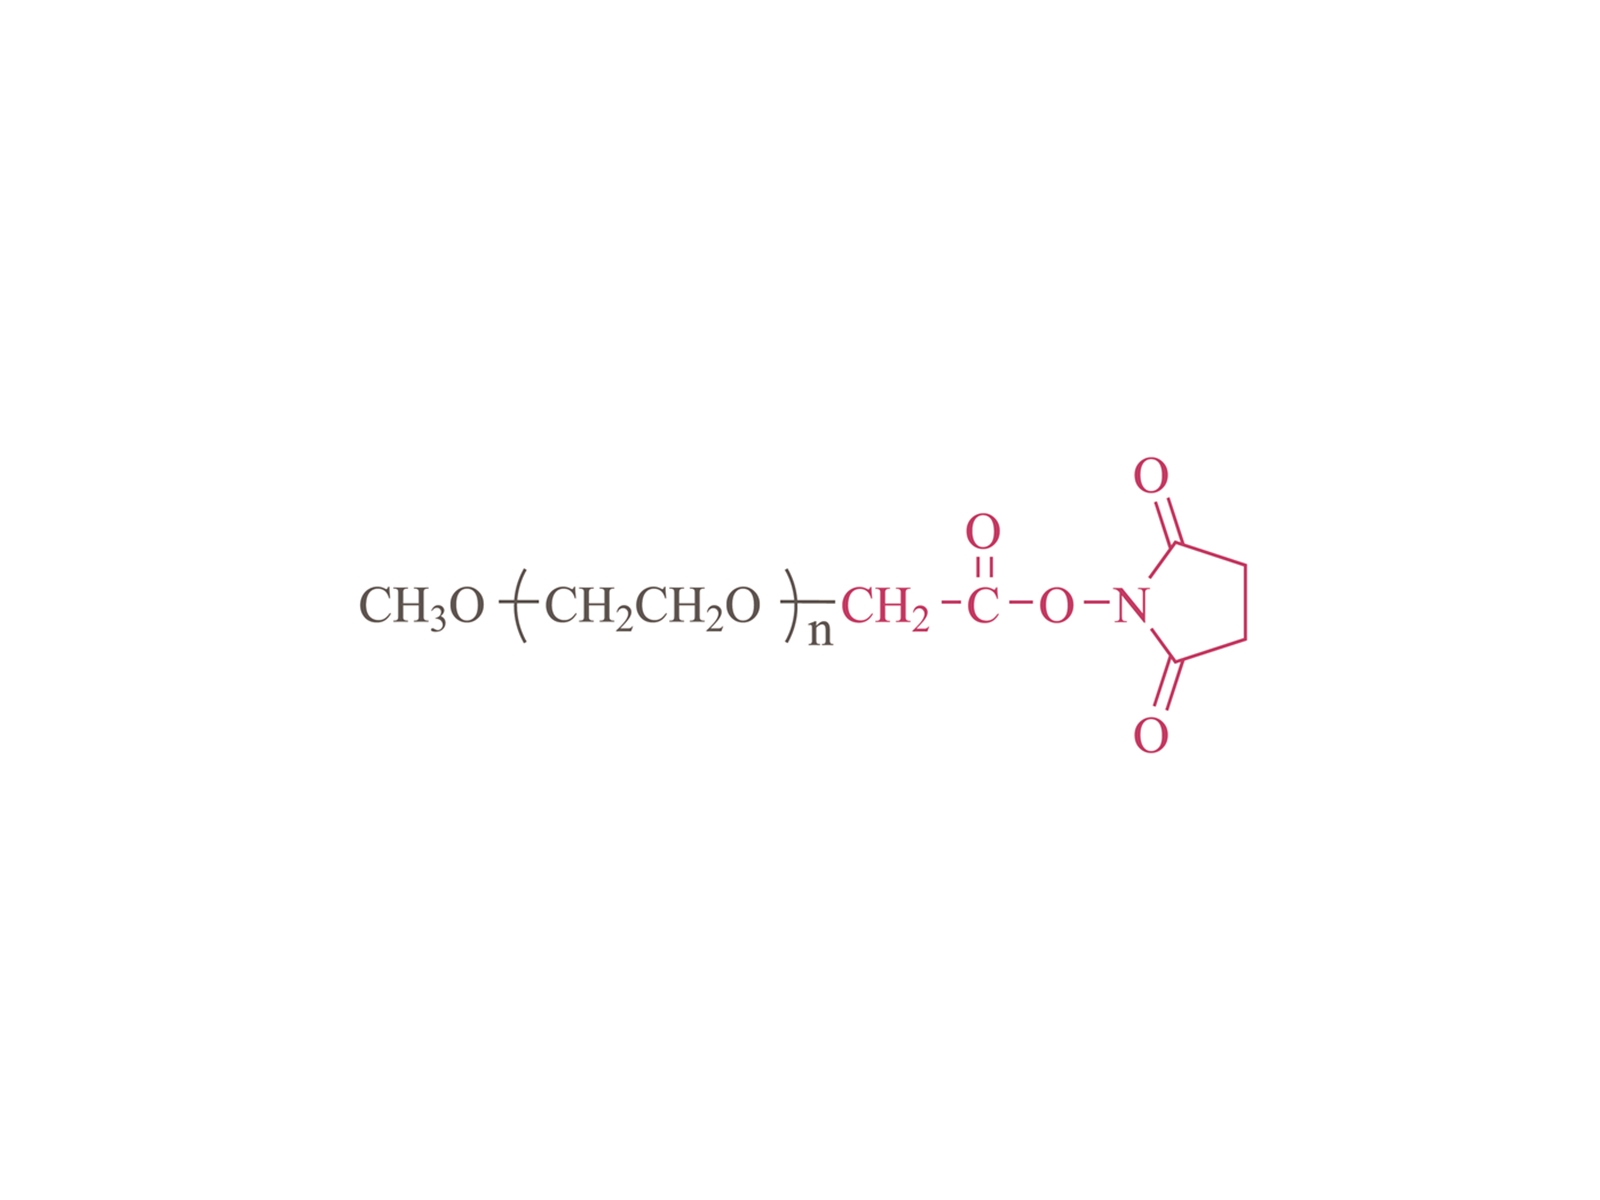 Methoxypoly (etilenglicol) succinimidil carboximetil éster [MPEG-SCM]